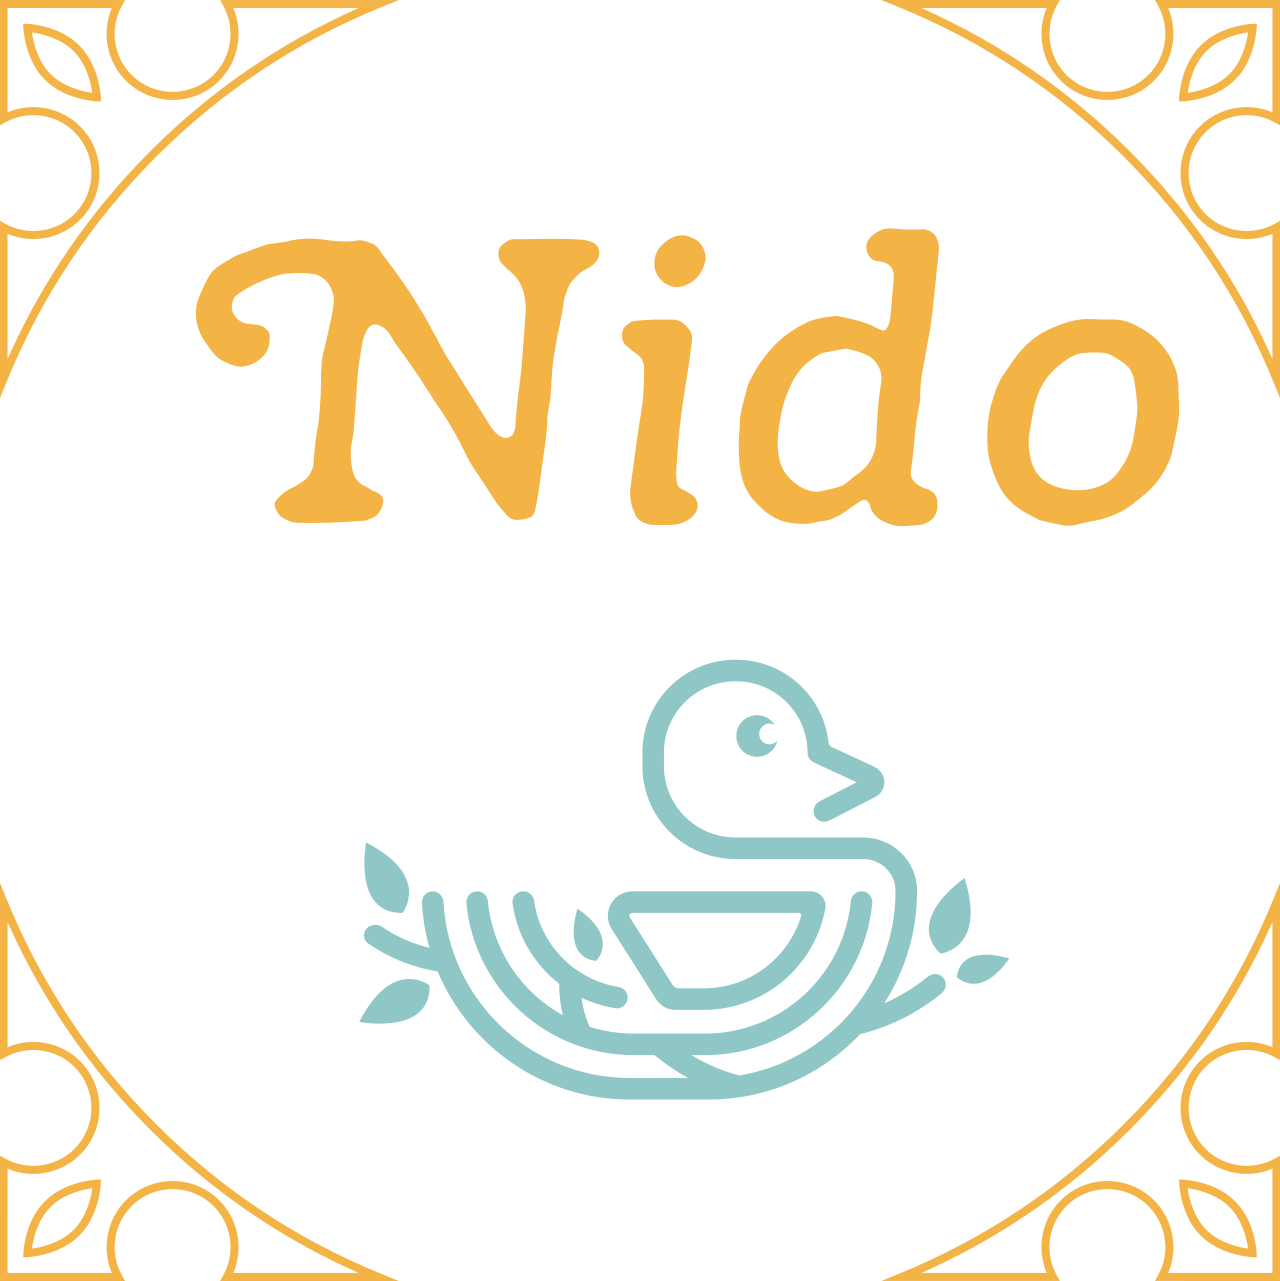 Nido's logo